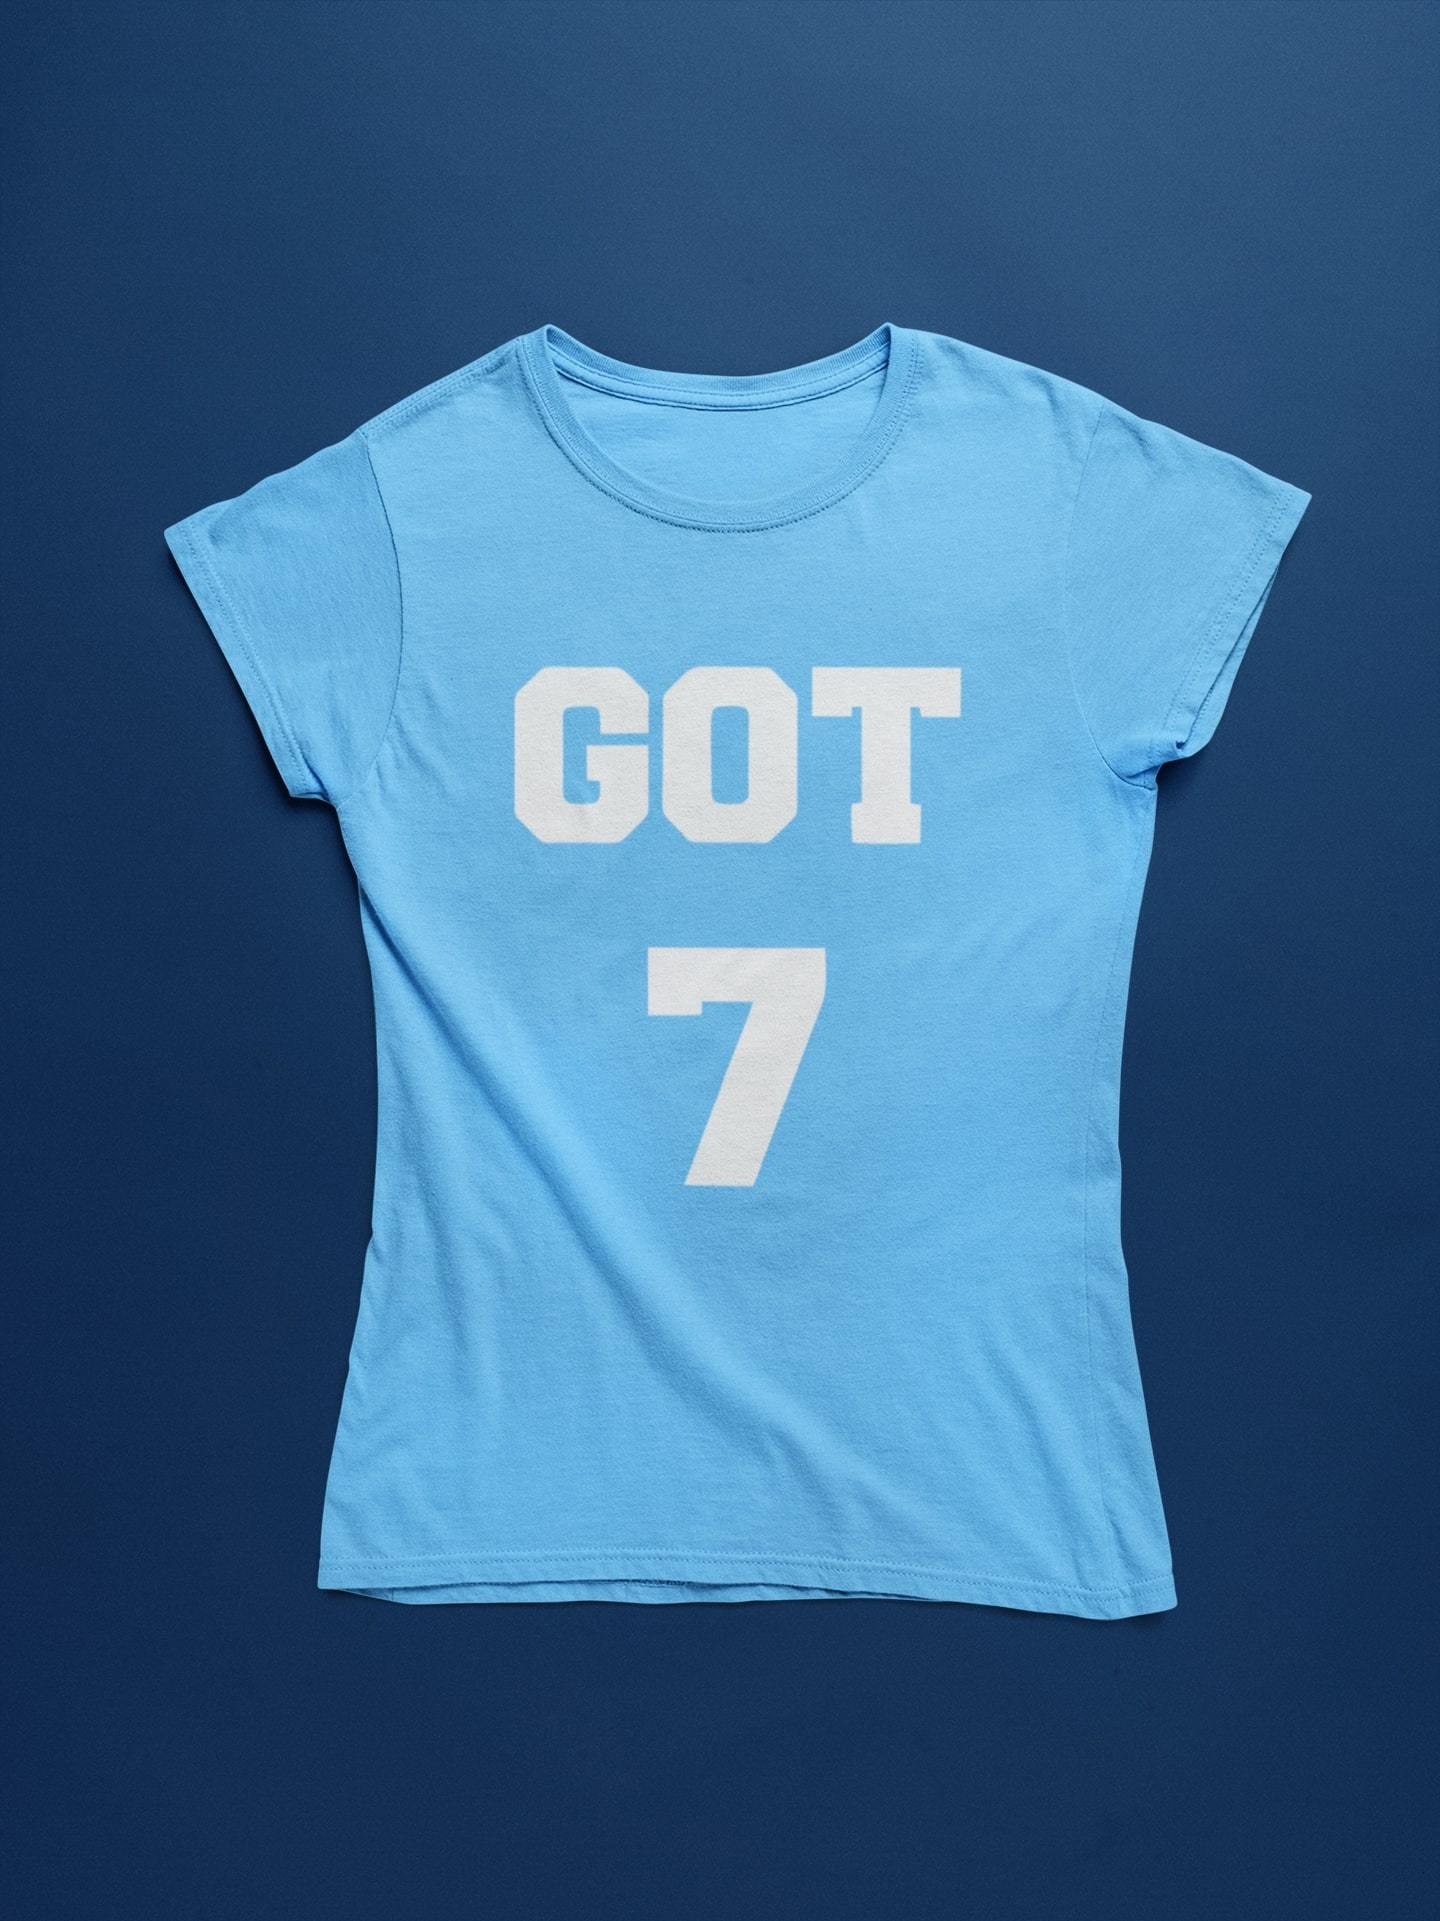 thelegalgang,KPOP GOT7 T-Shirt for Women,WOMEN.